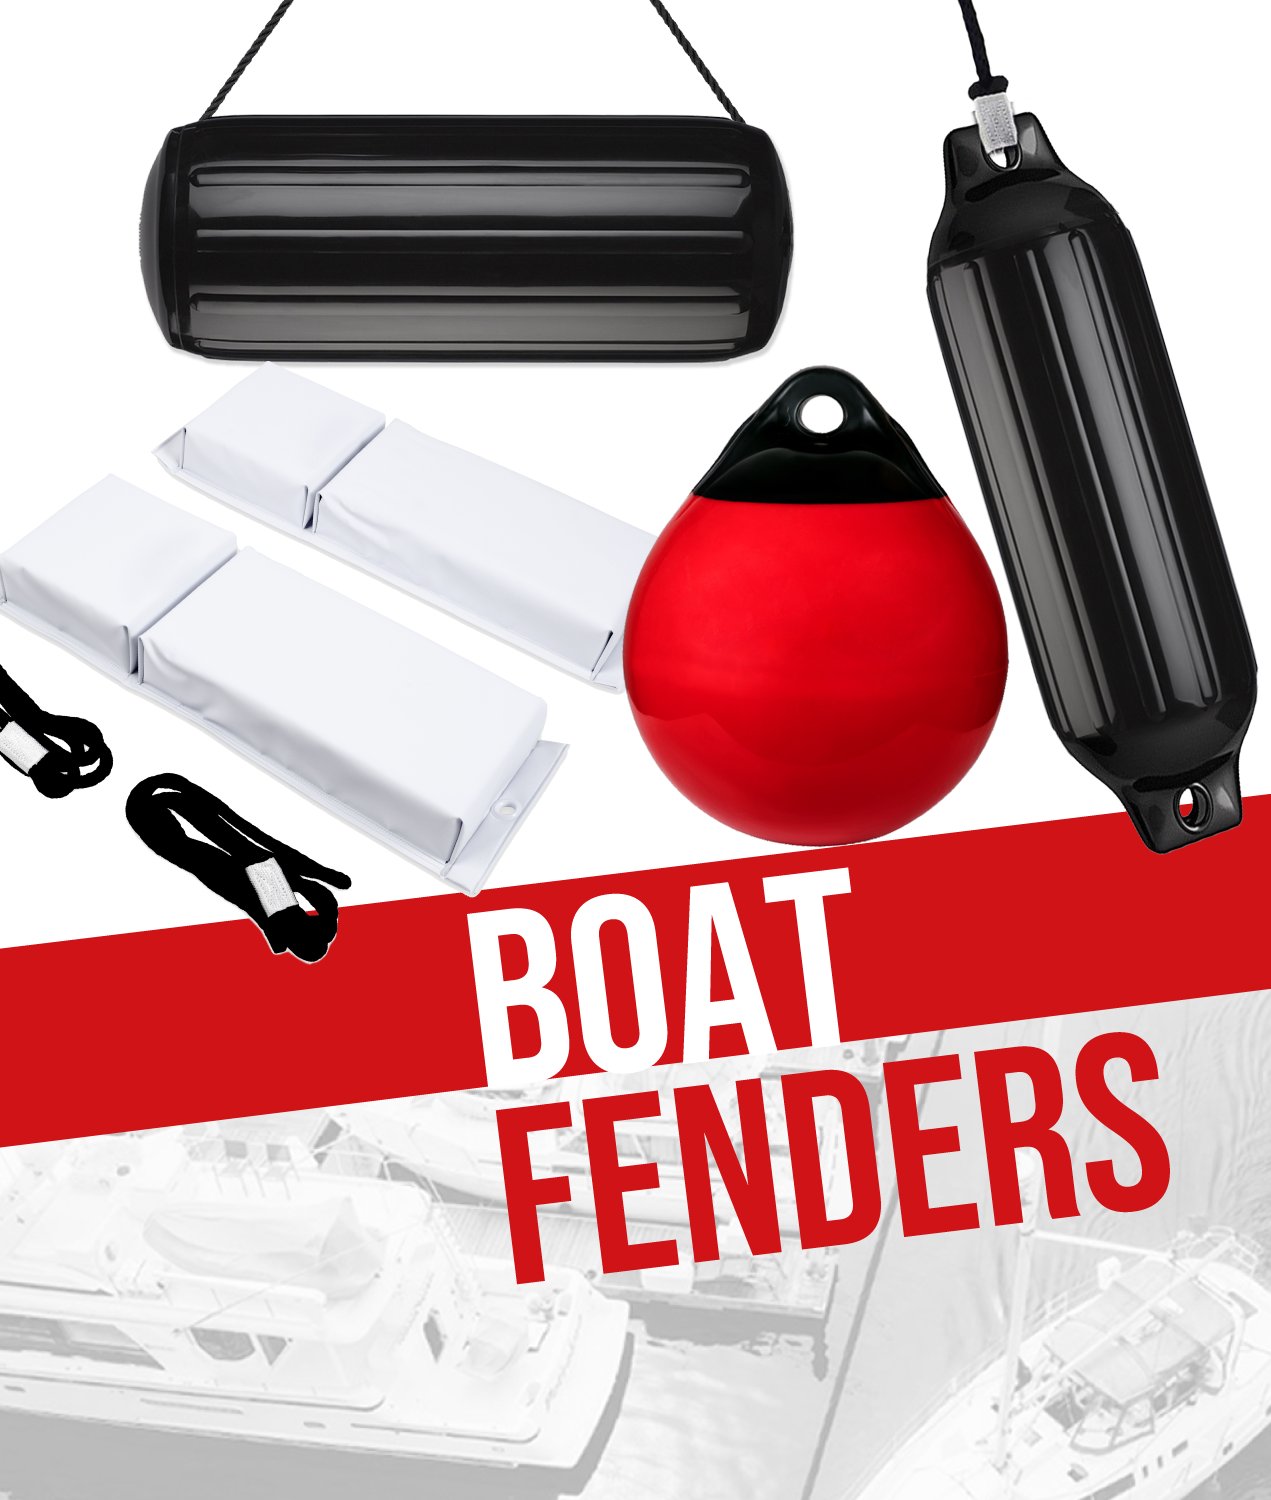 BTG Gear Boat Fenders